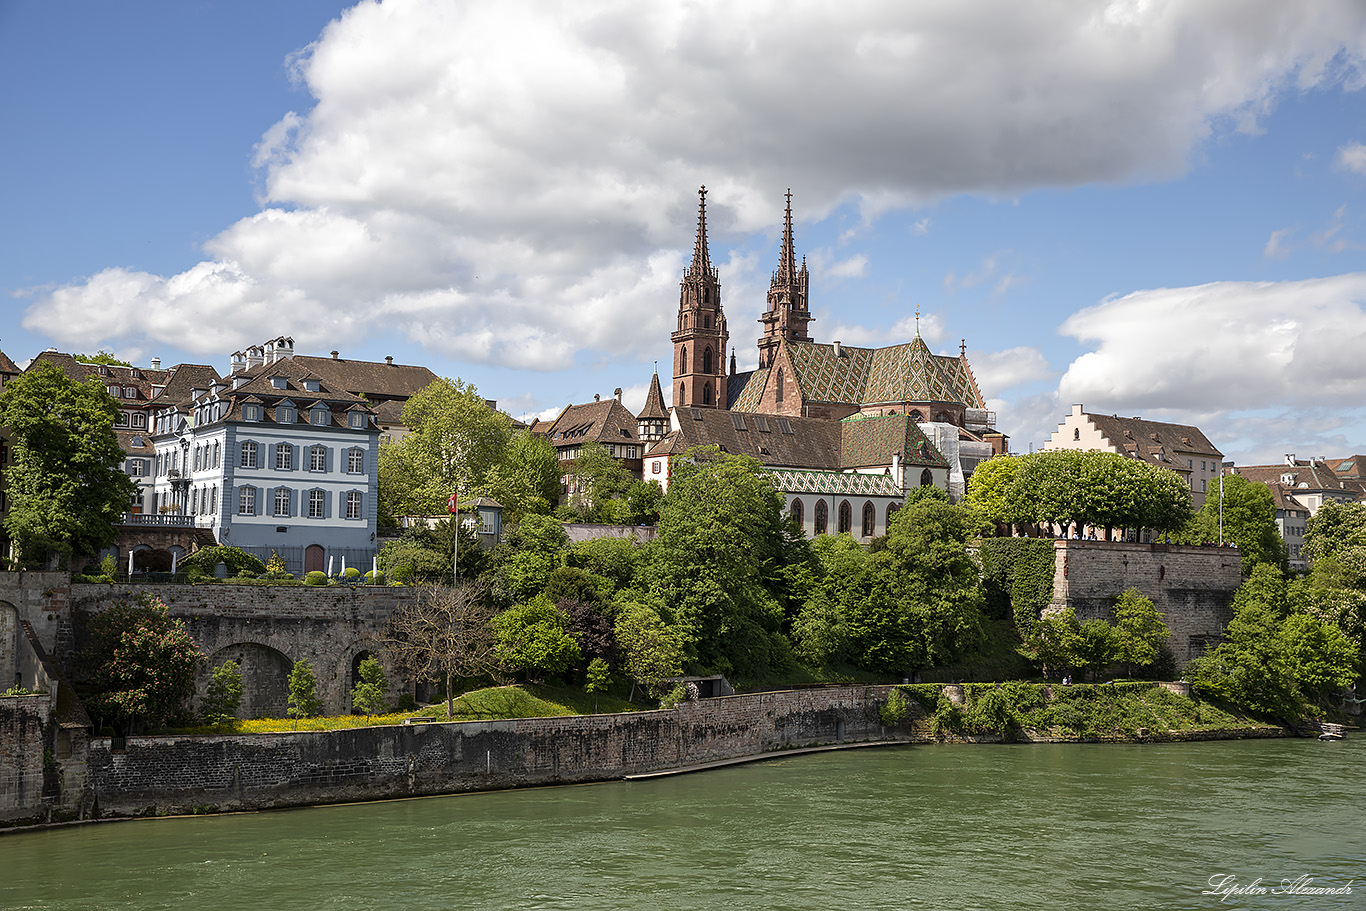 Базель (Basel) - Швейцария (Switzerland)